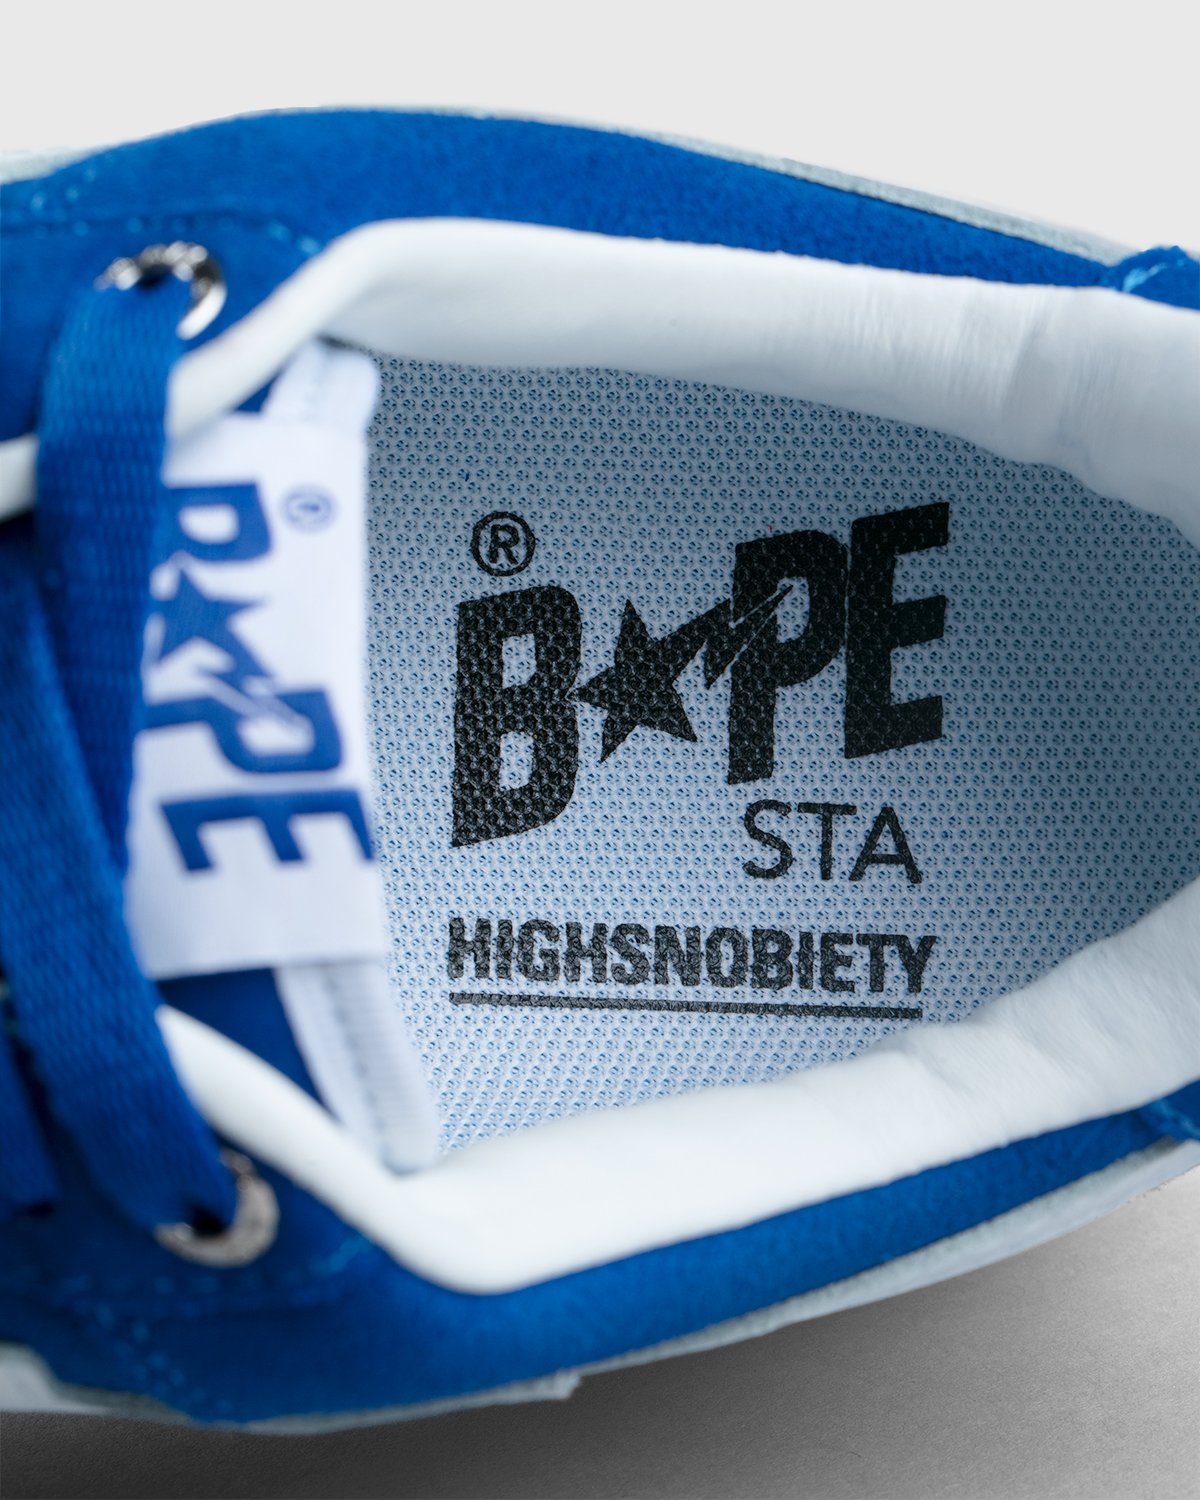 BAPE x Highsnobiety - BAPE STA Blue - Footwear - Blue - Image 8